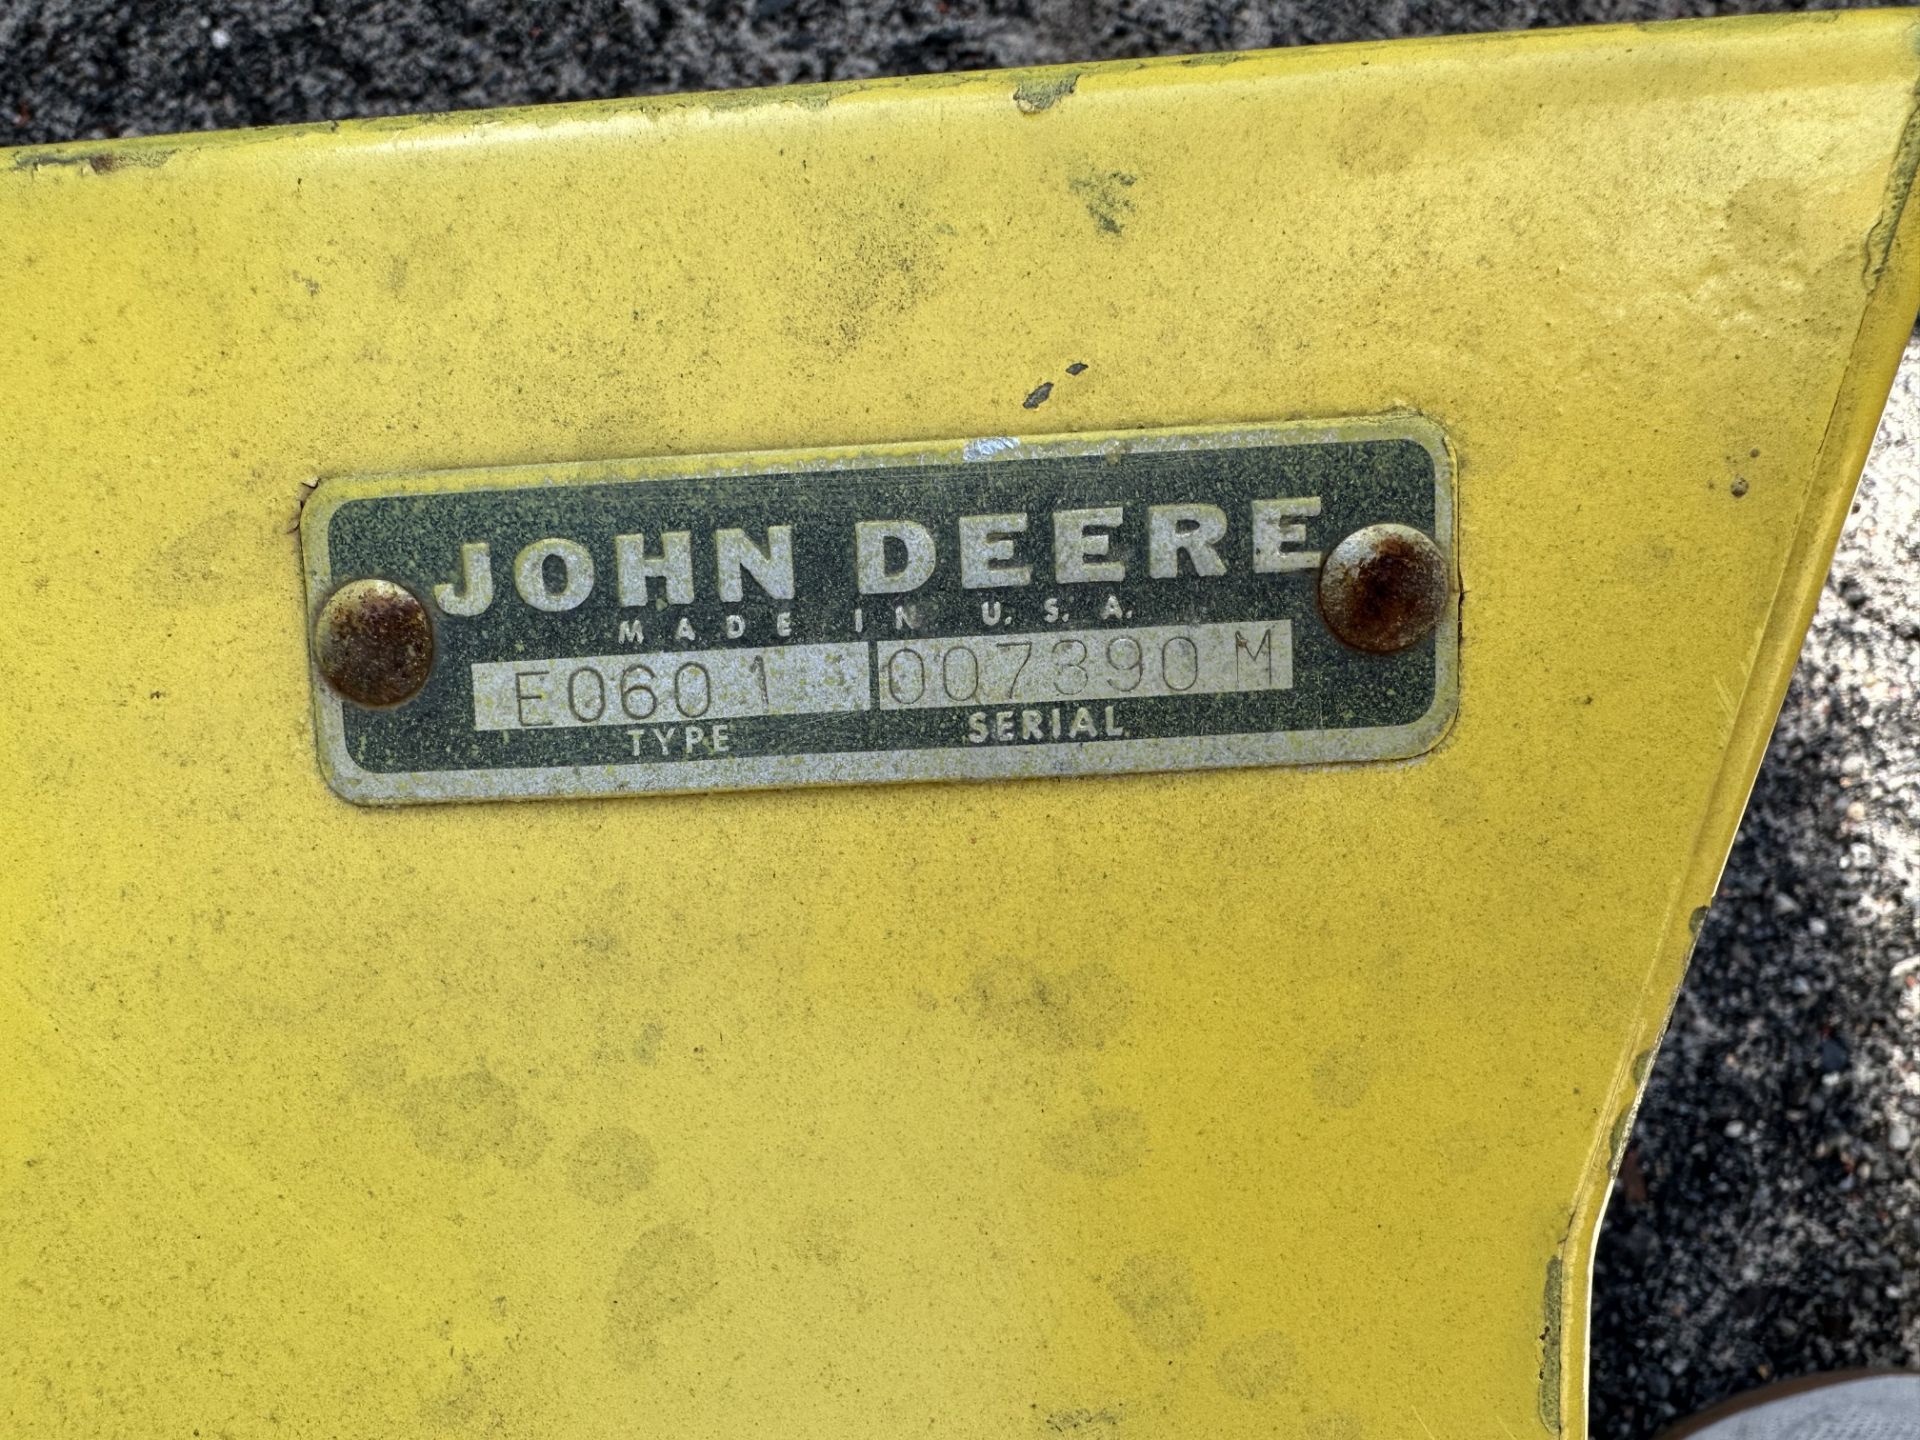 (SEE VIDEO) John Deere 300 Garden Tractor w/18HP Kohler Motor, 48" Mowing Deck Attachment & #E0601 - Image 6 of 6